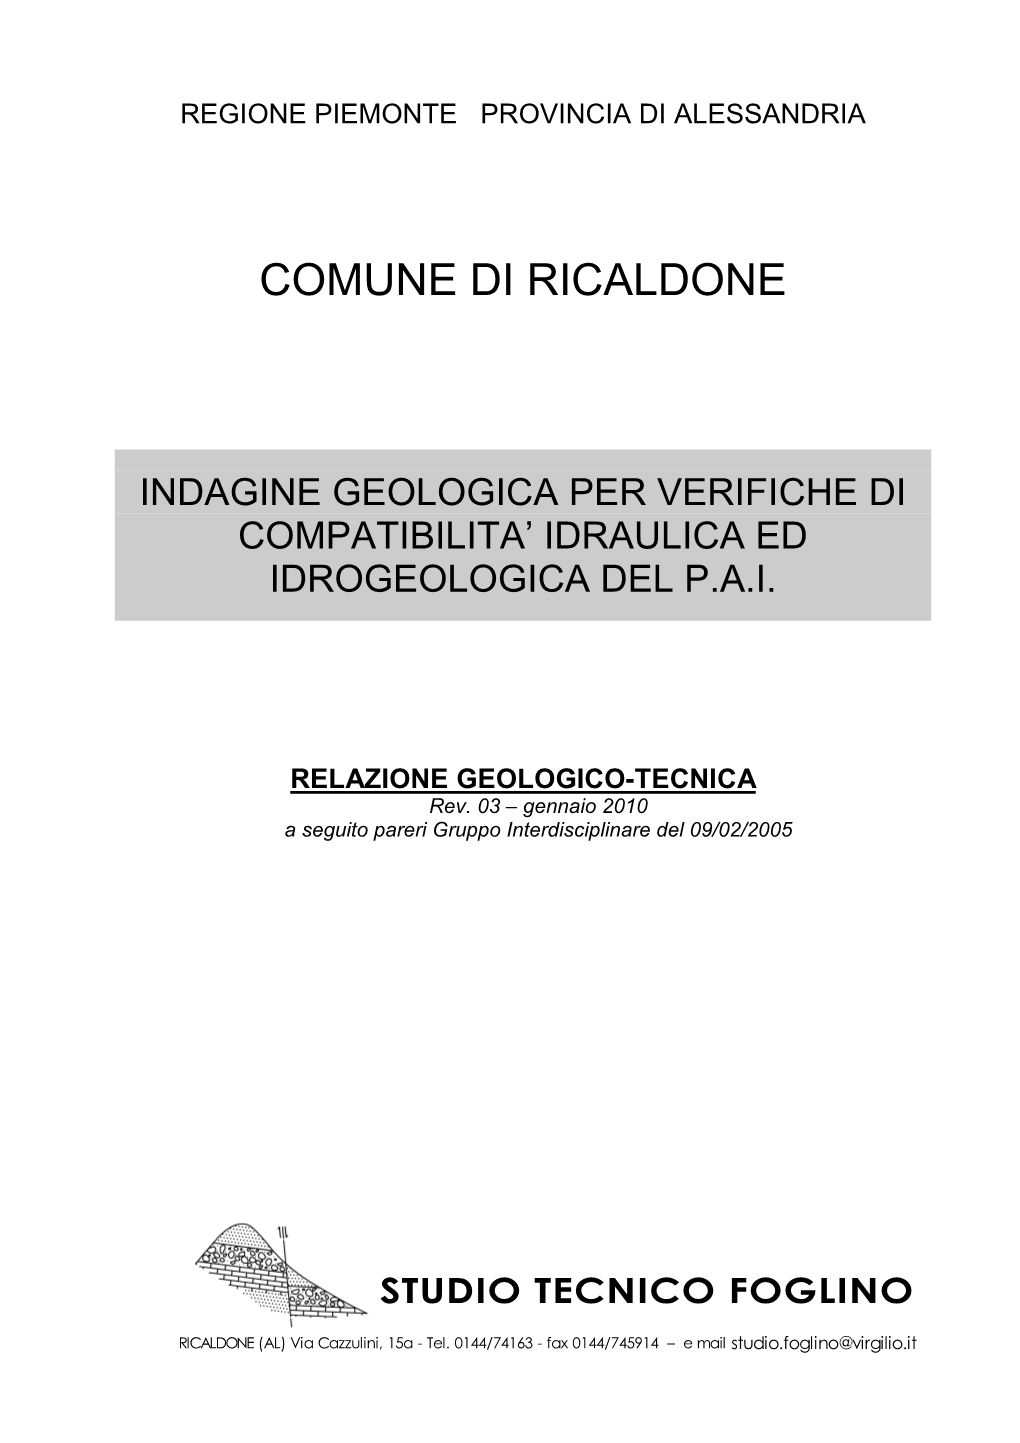 Indagine Geologica Per Verifiche Di Compatibilita' Idraulica Ed Idrogeologica Del